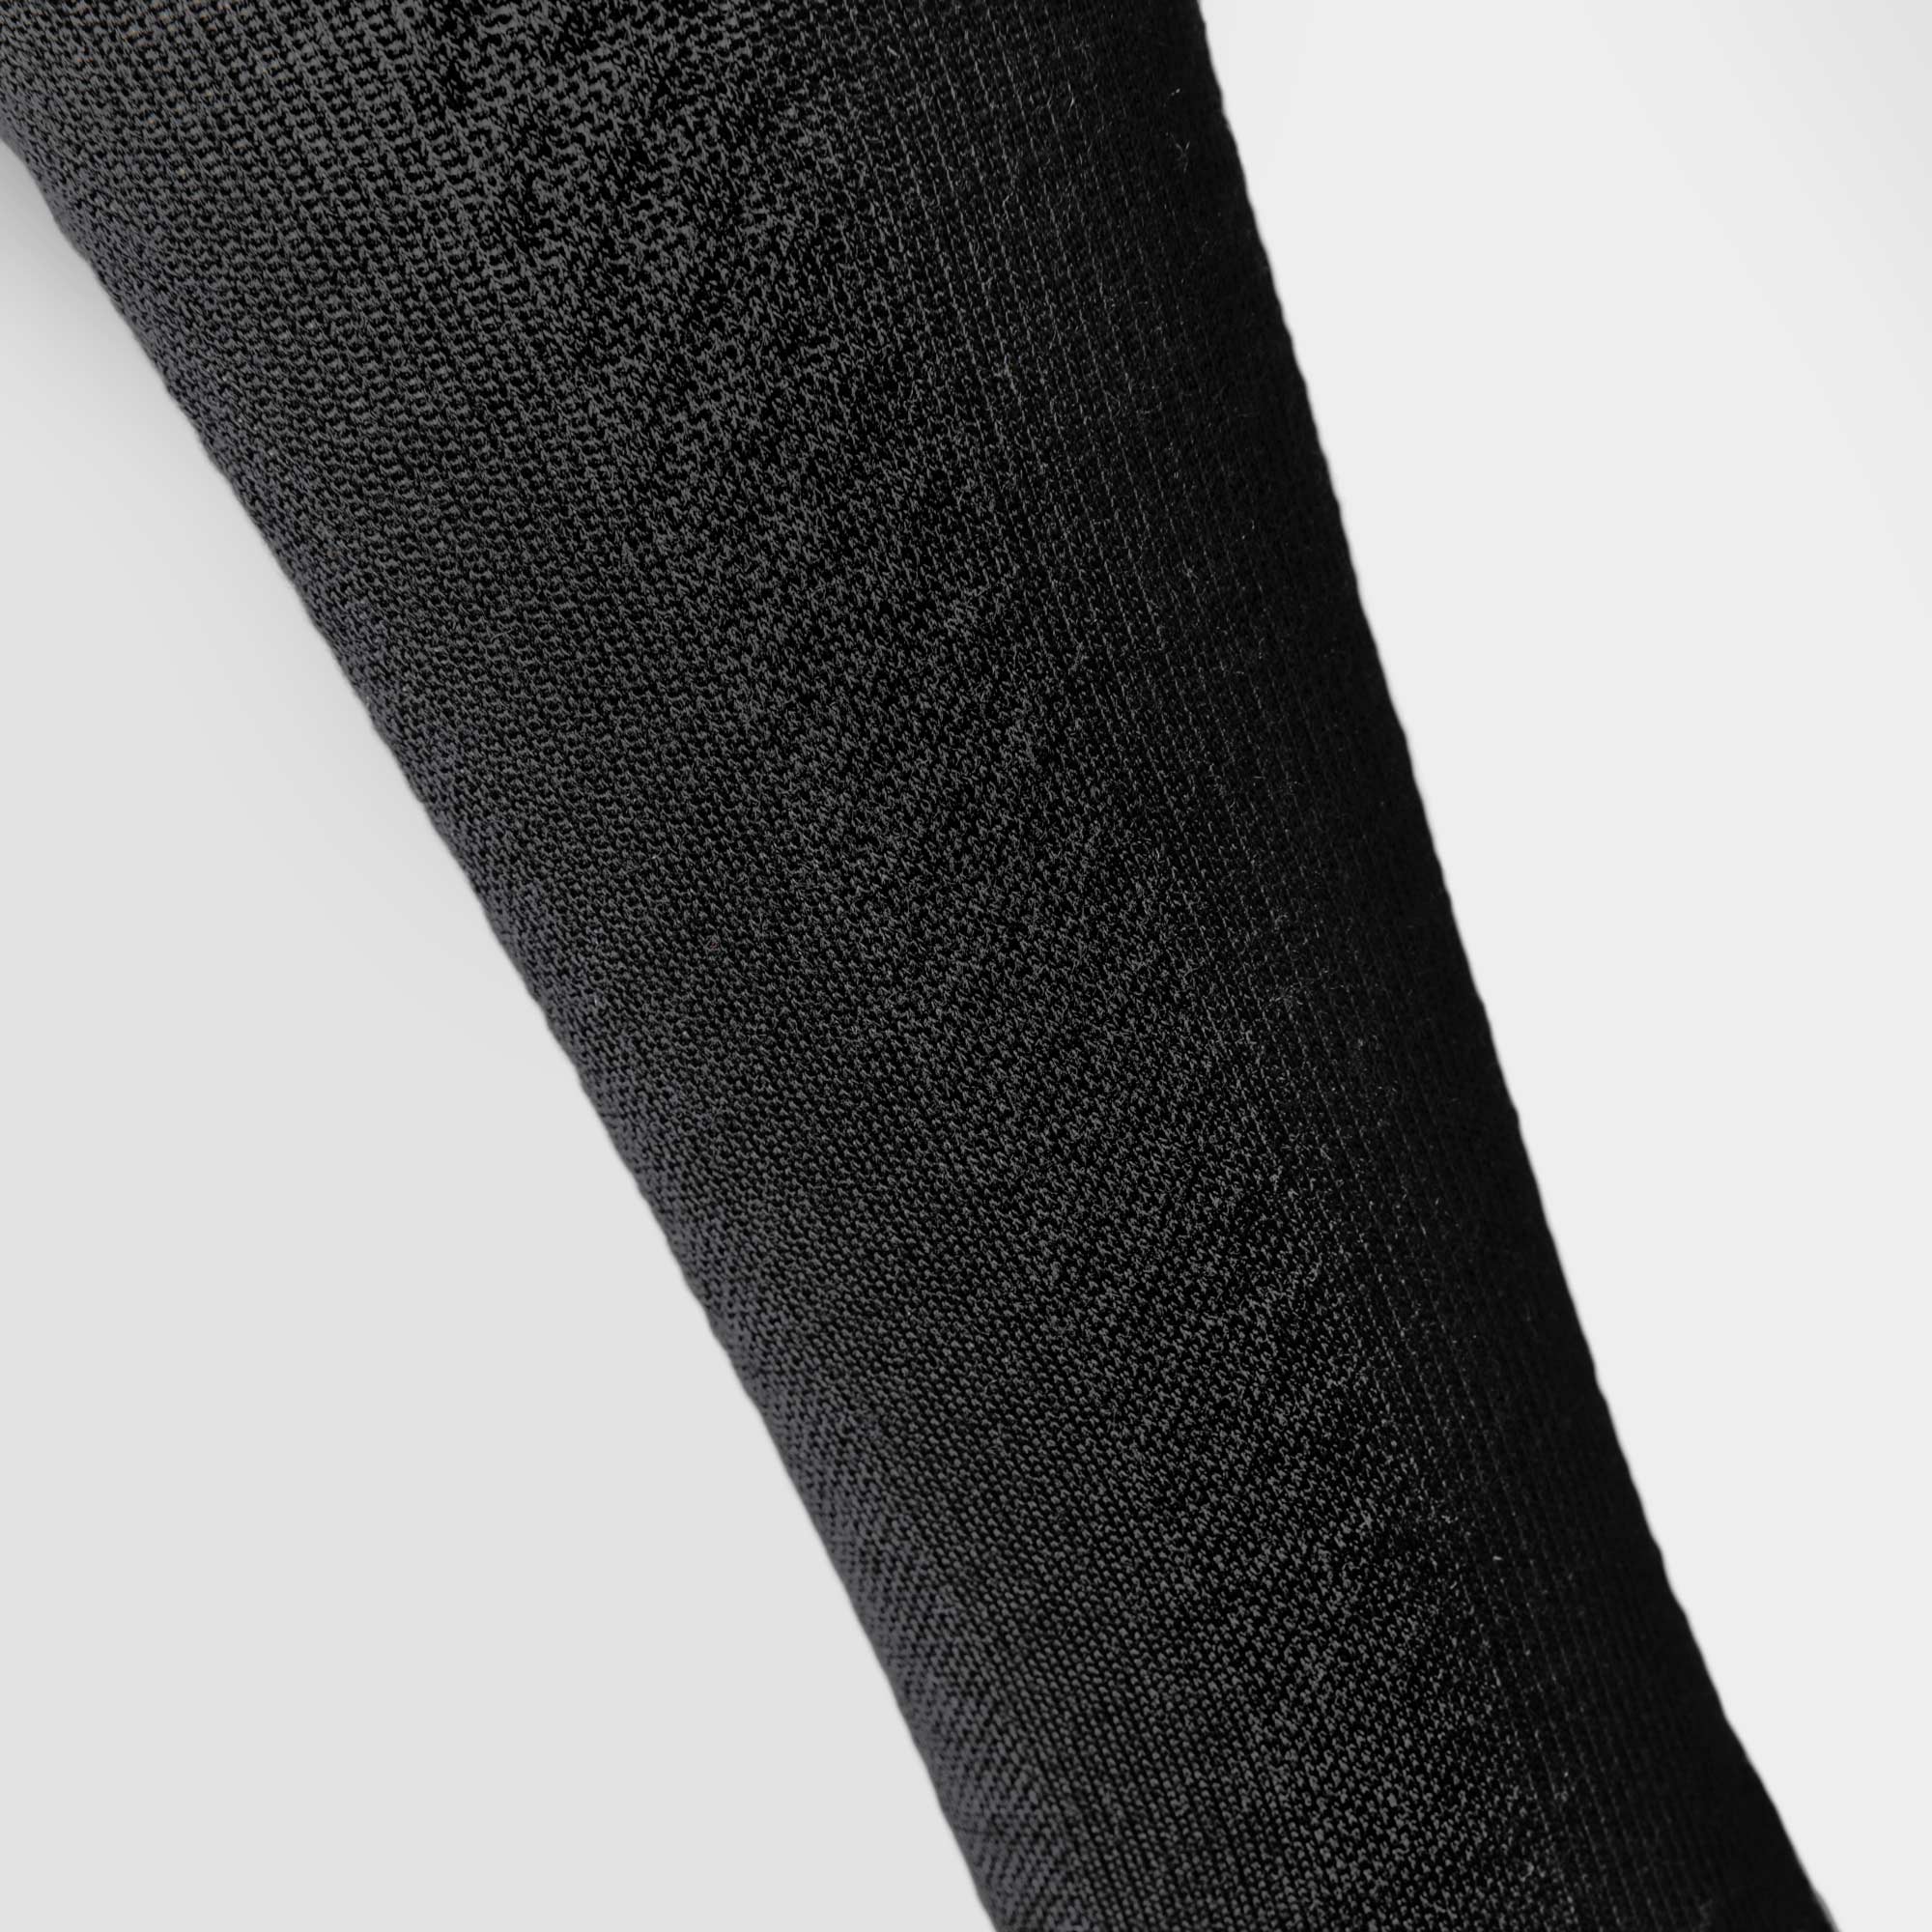 Liiteguard MERINO SHIN-TECH RUNNING SOCK Long socks Black